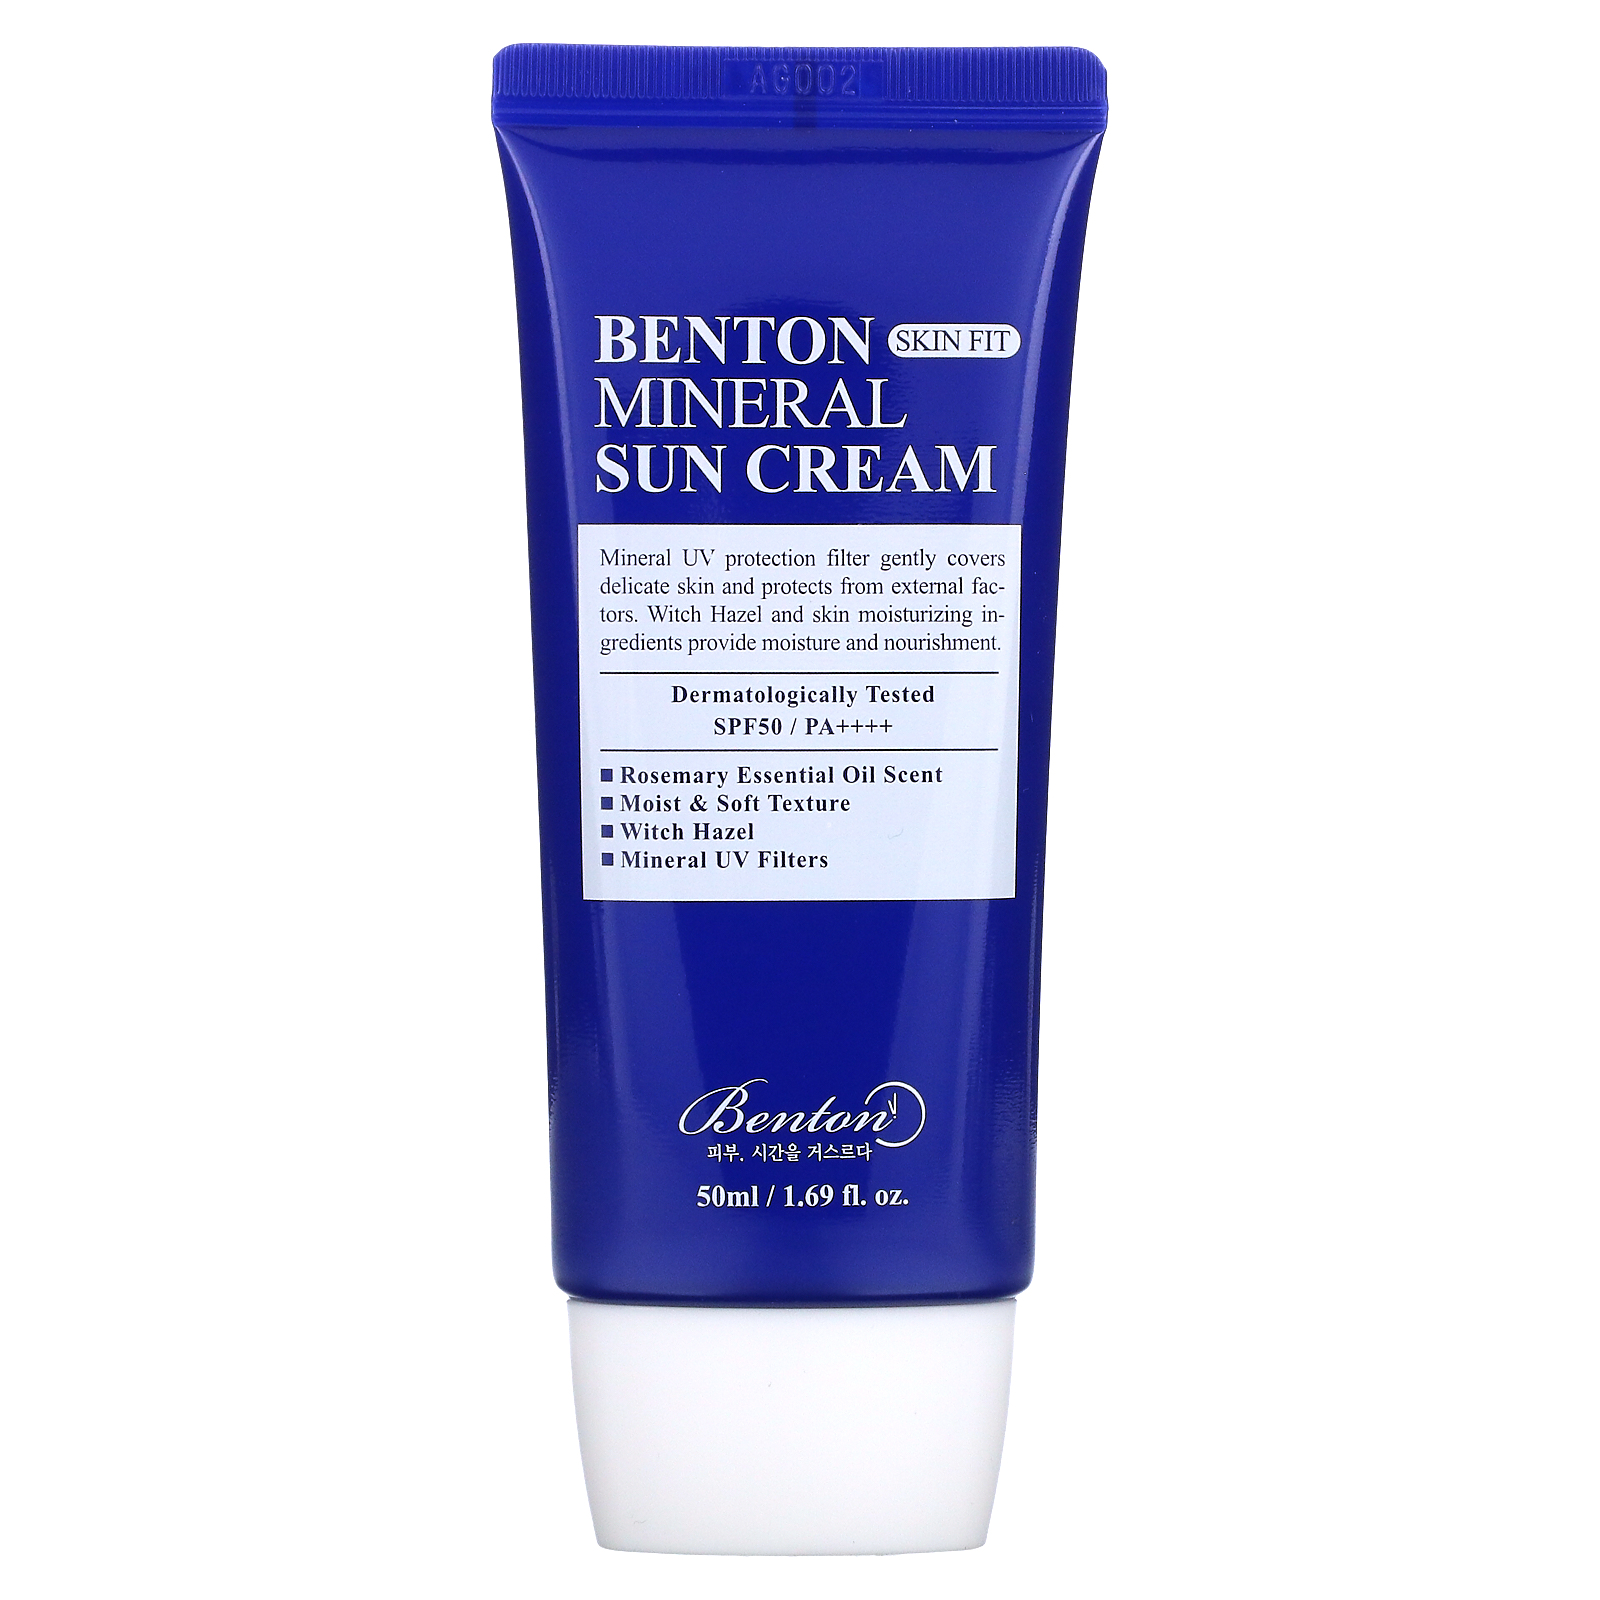 Benton, Skin Fit Mineral Sun Cream, SPF 50/PA++++, 1.69 fl oz (50 ml)